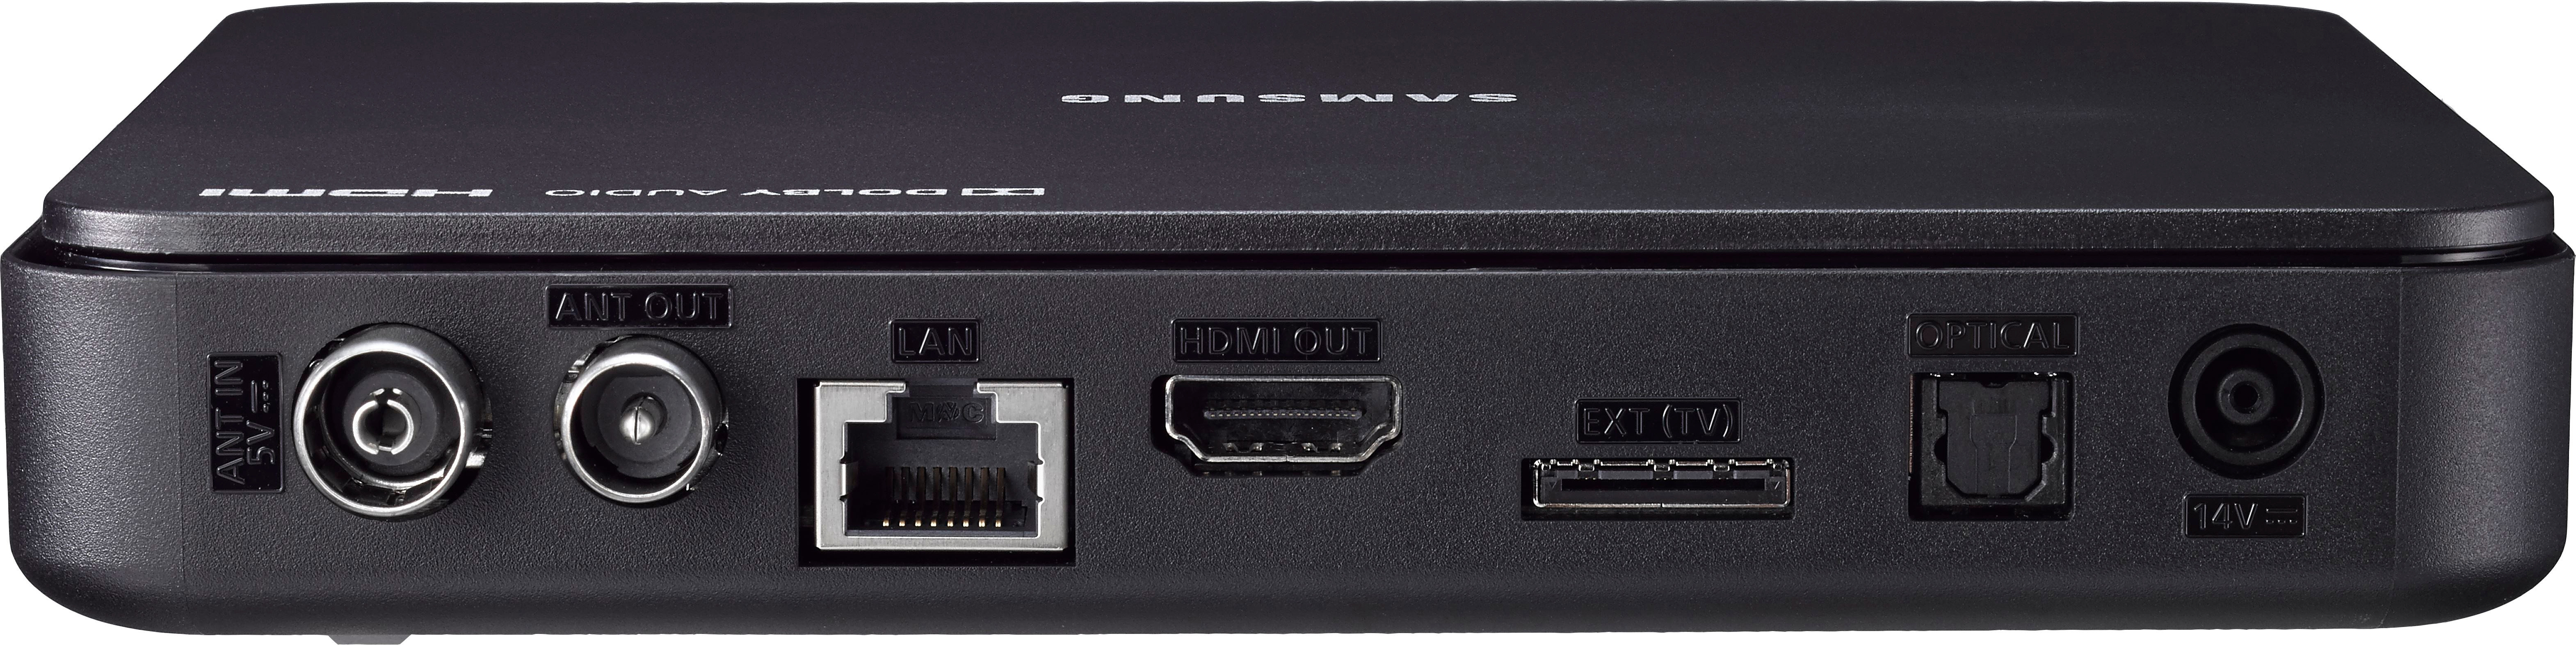 Media 12 1 IN Receiver Box 3 Lite DVB-T2 Monate - SAMSUNG GX-MB540TL/ZG freenet (Schwarz) TV HD Paket